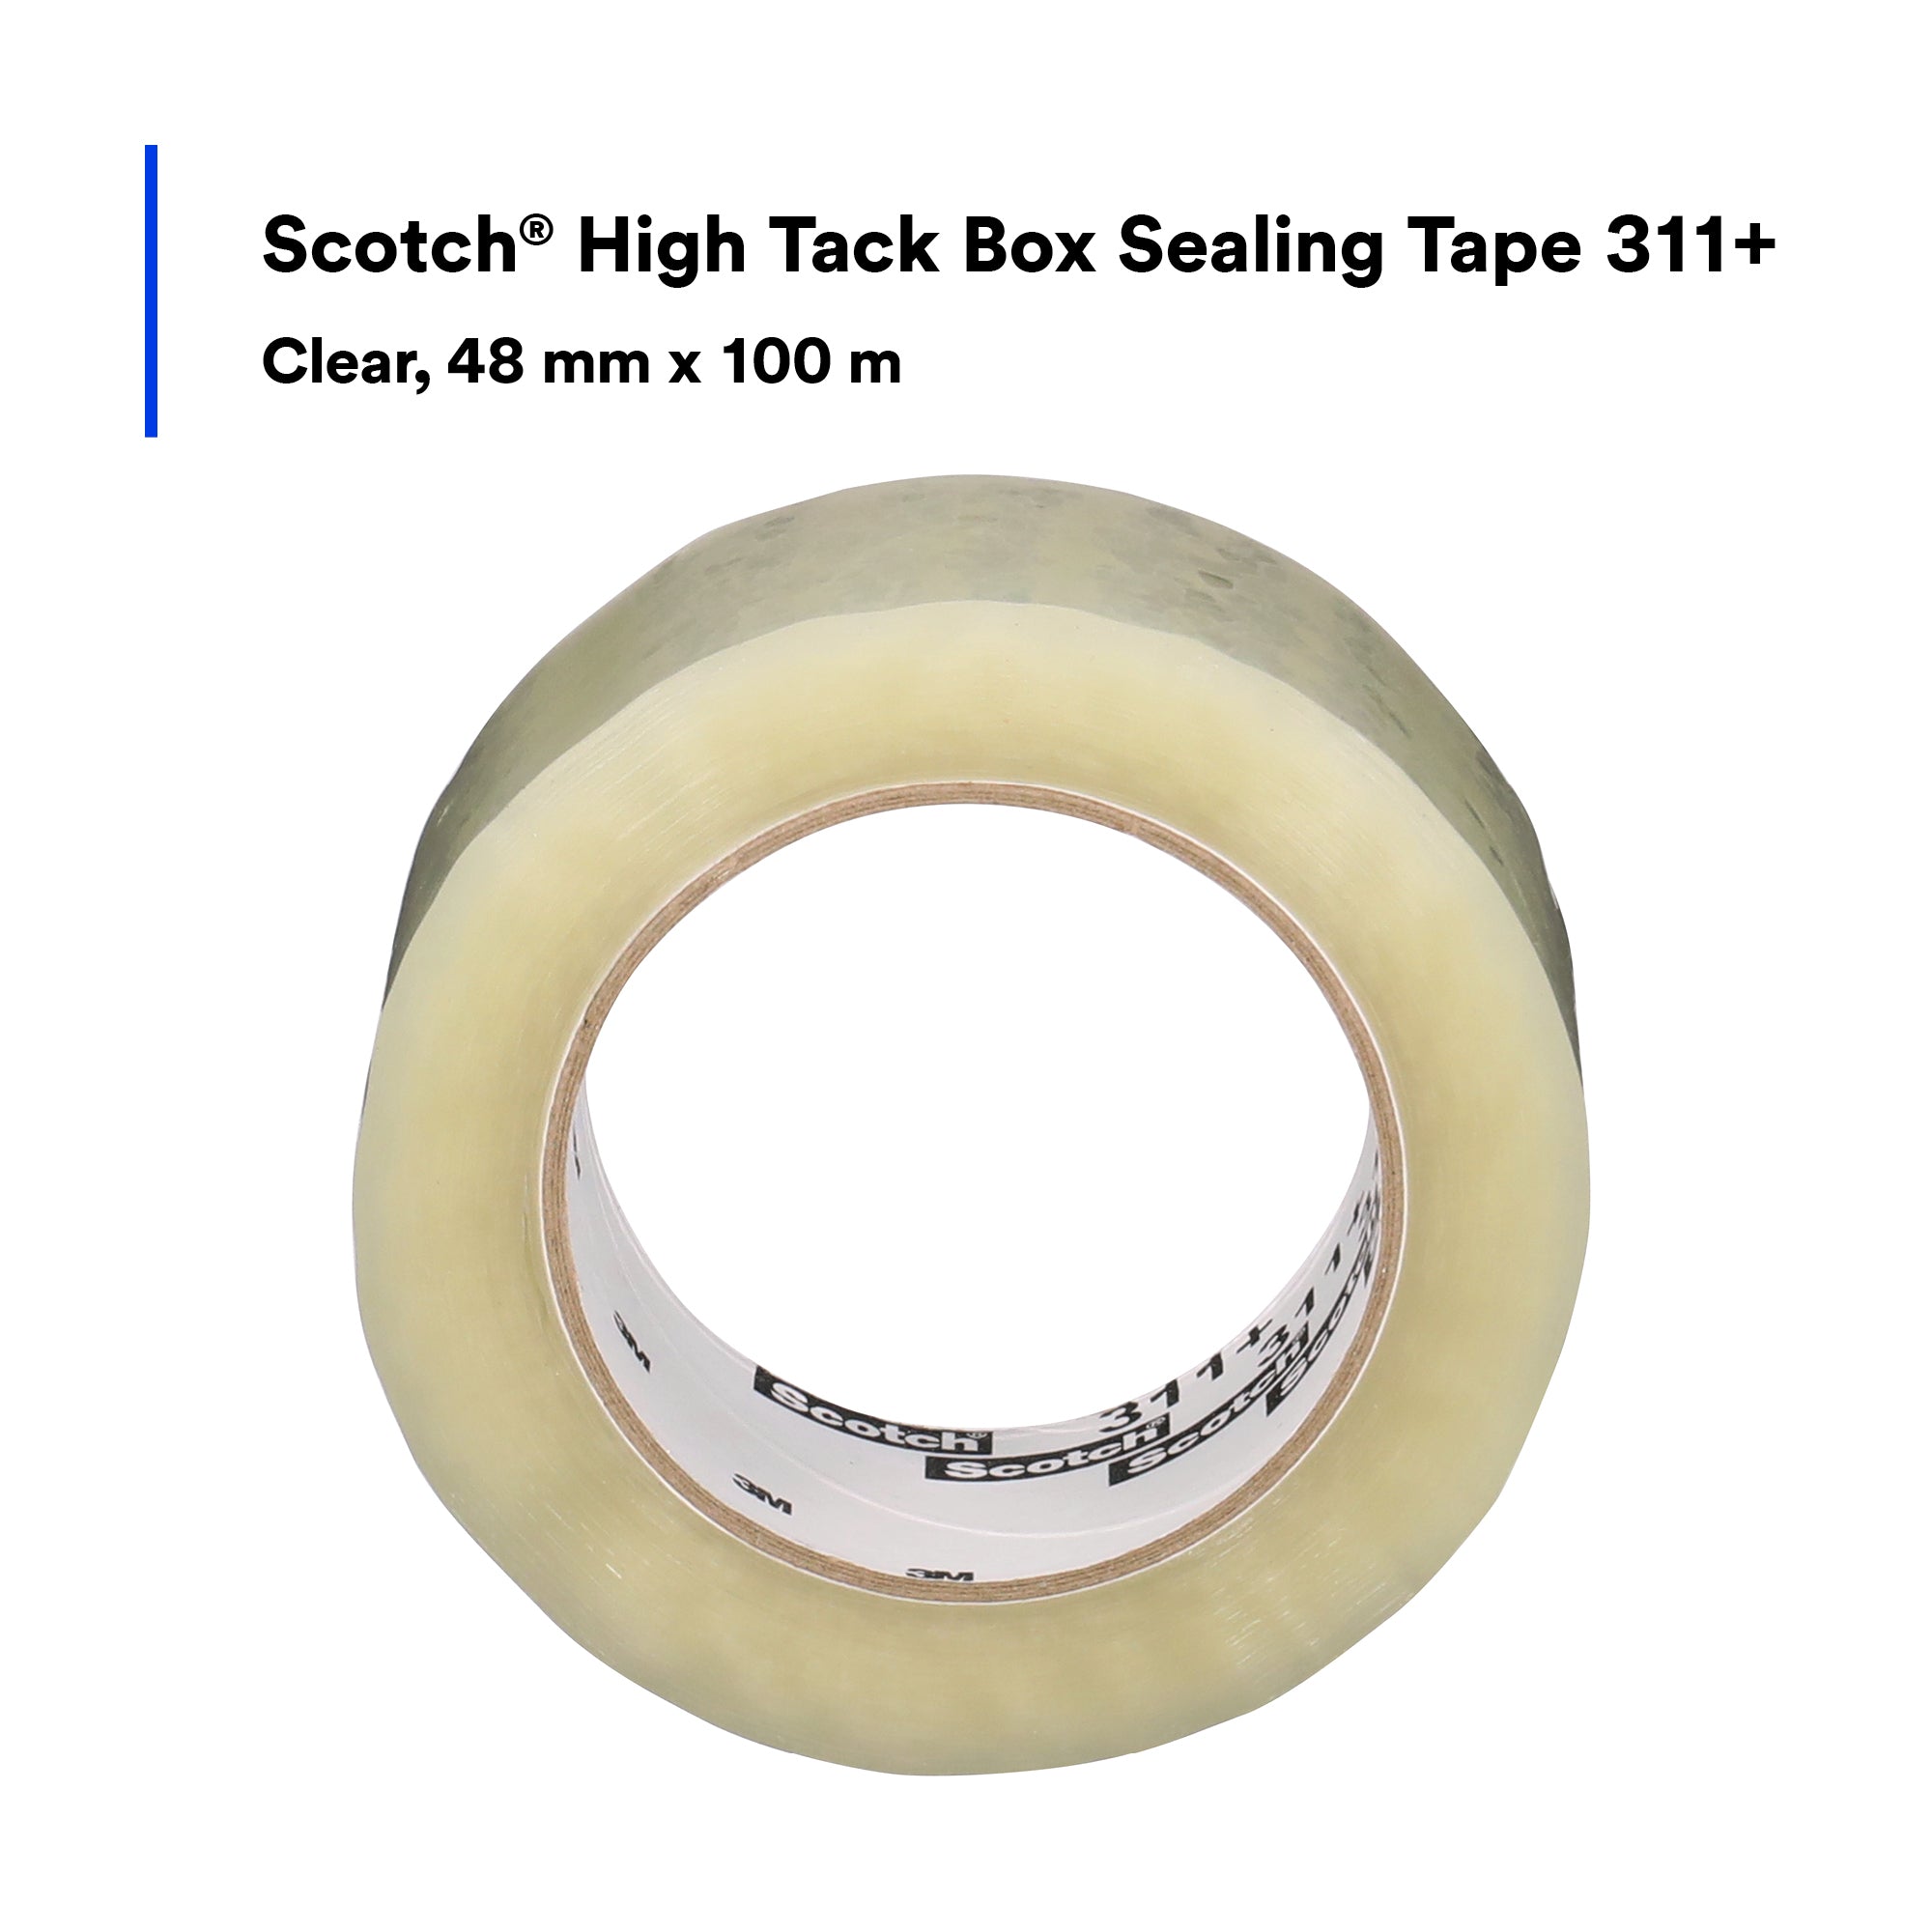 Scotch High Tack Box Sealing Tape 311+, Clear, 48 mm x 100 m, 1 Roll